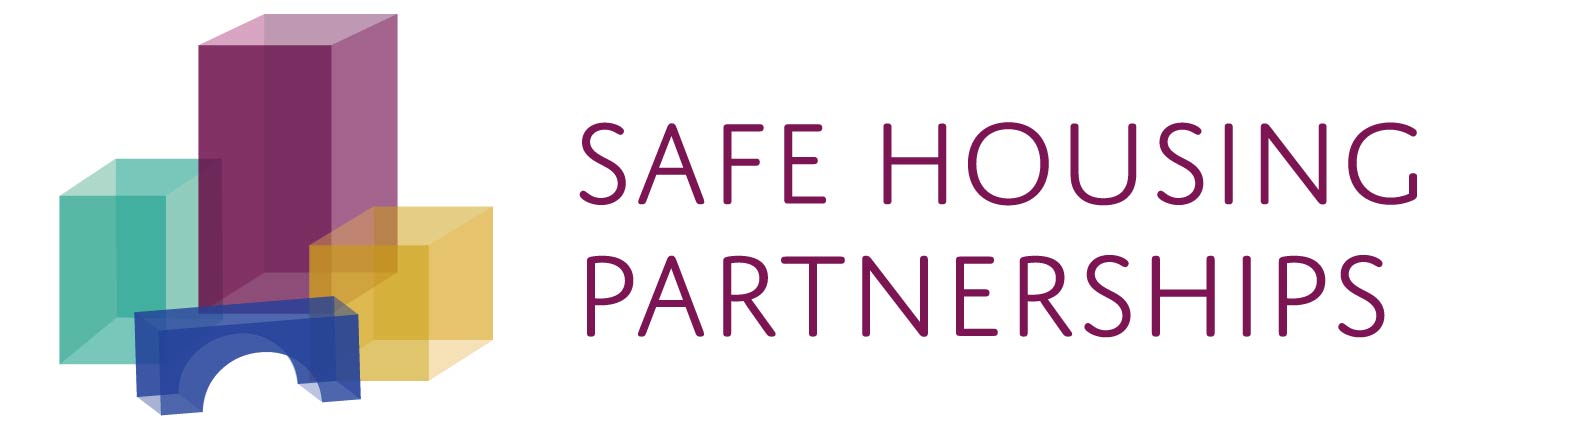 Safe Housing Partnership Logo_horazontal logo.jpg